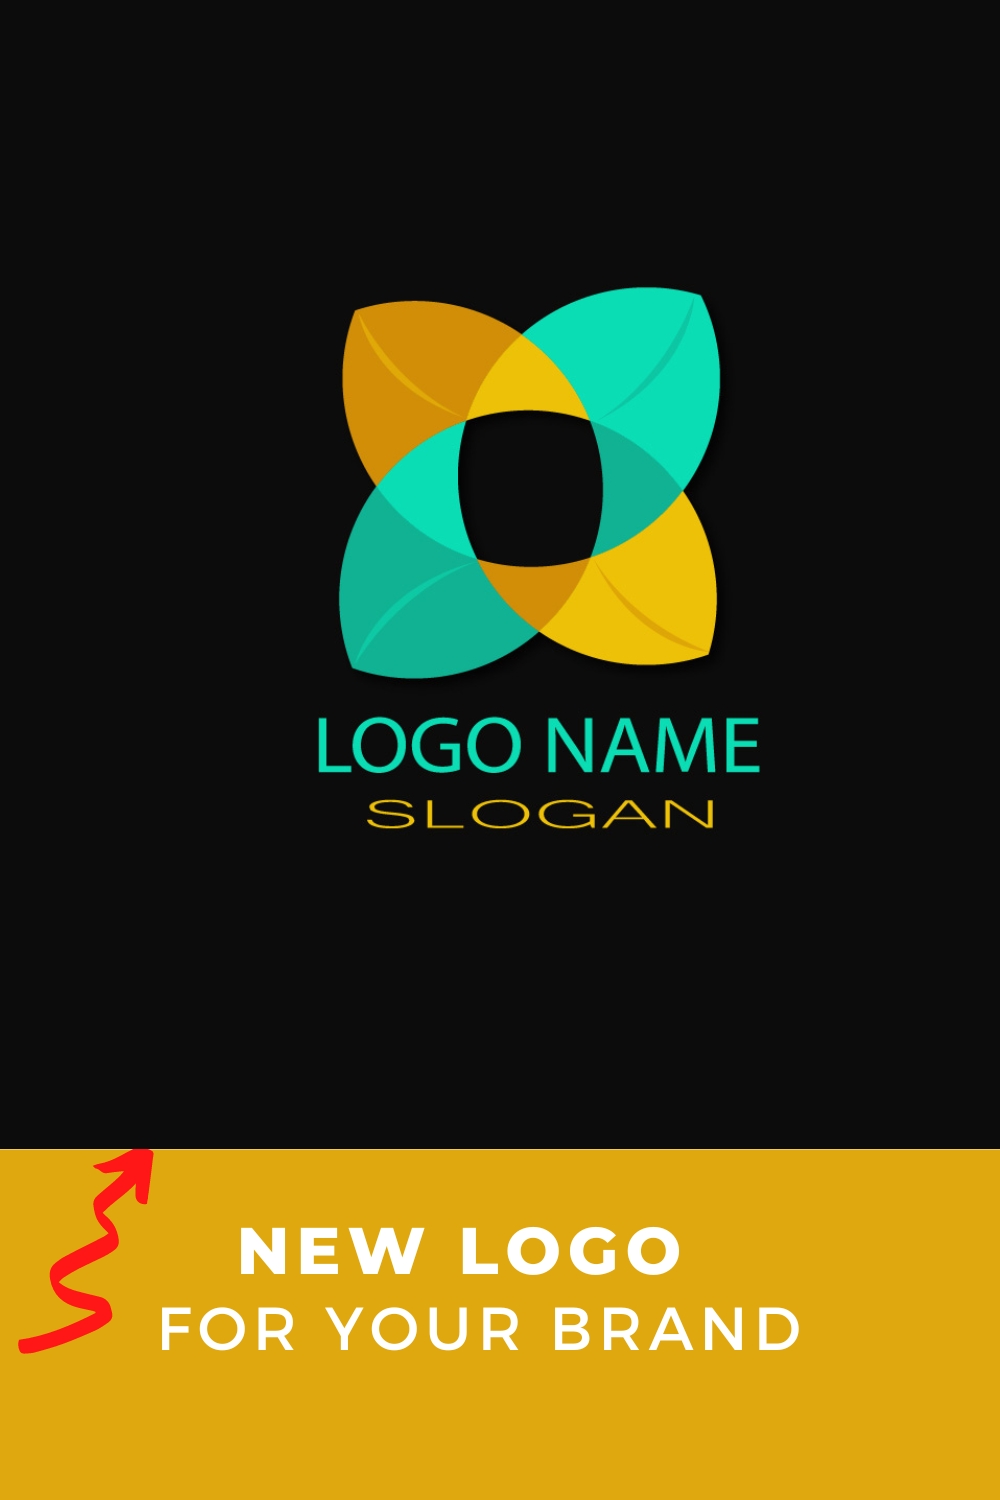 New Logo for Brand – Pinterest image preview.